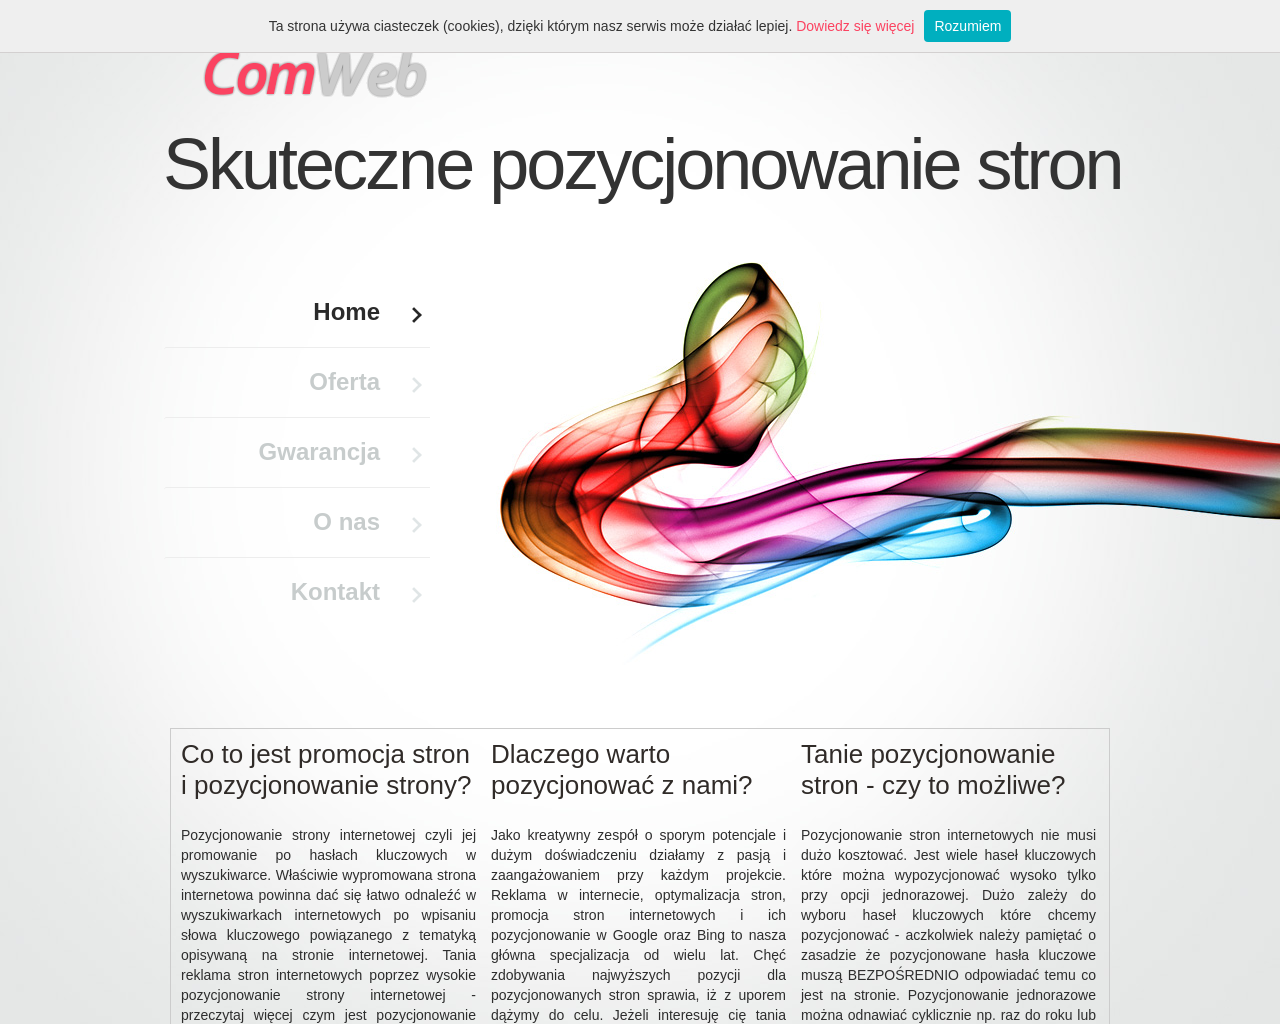 comweb.pl